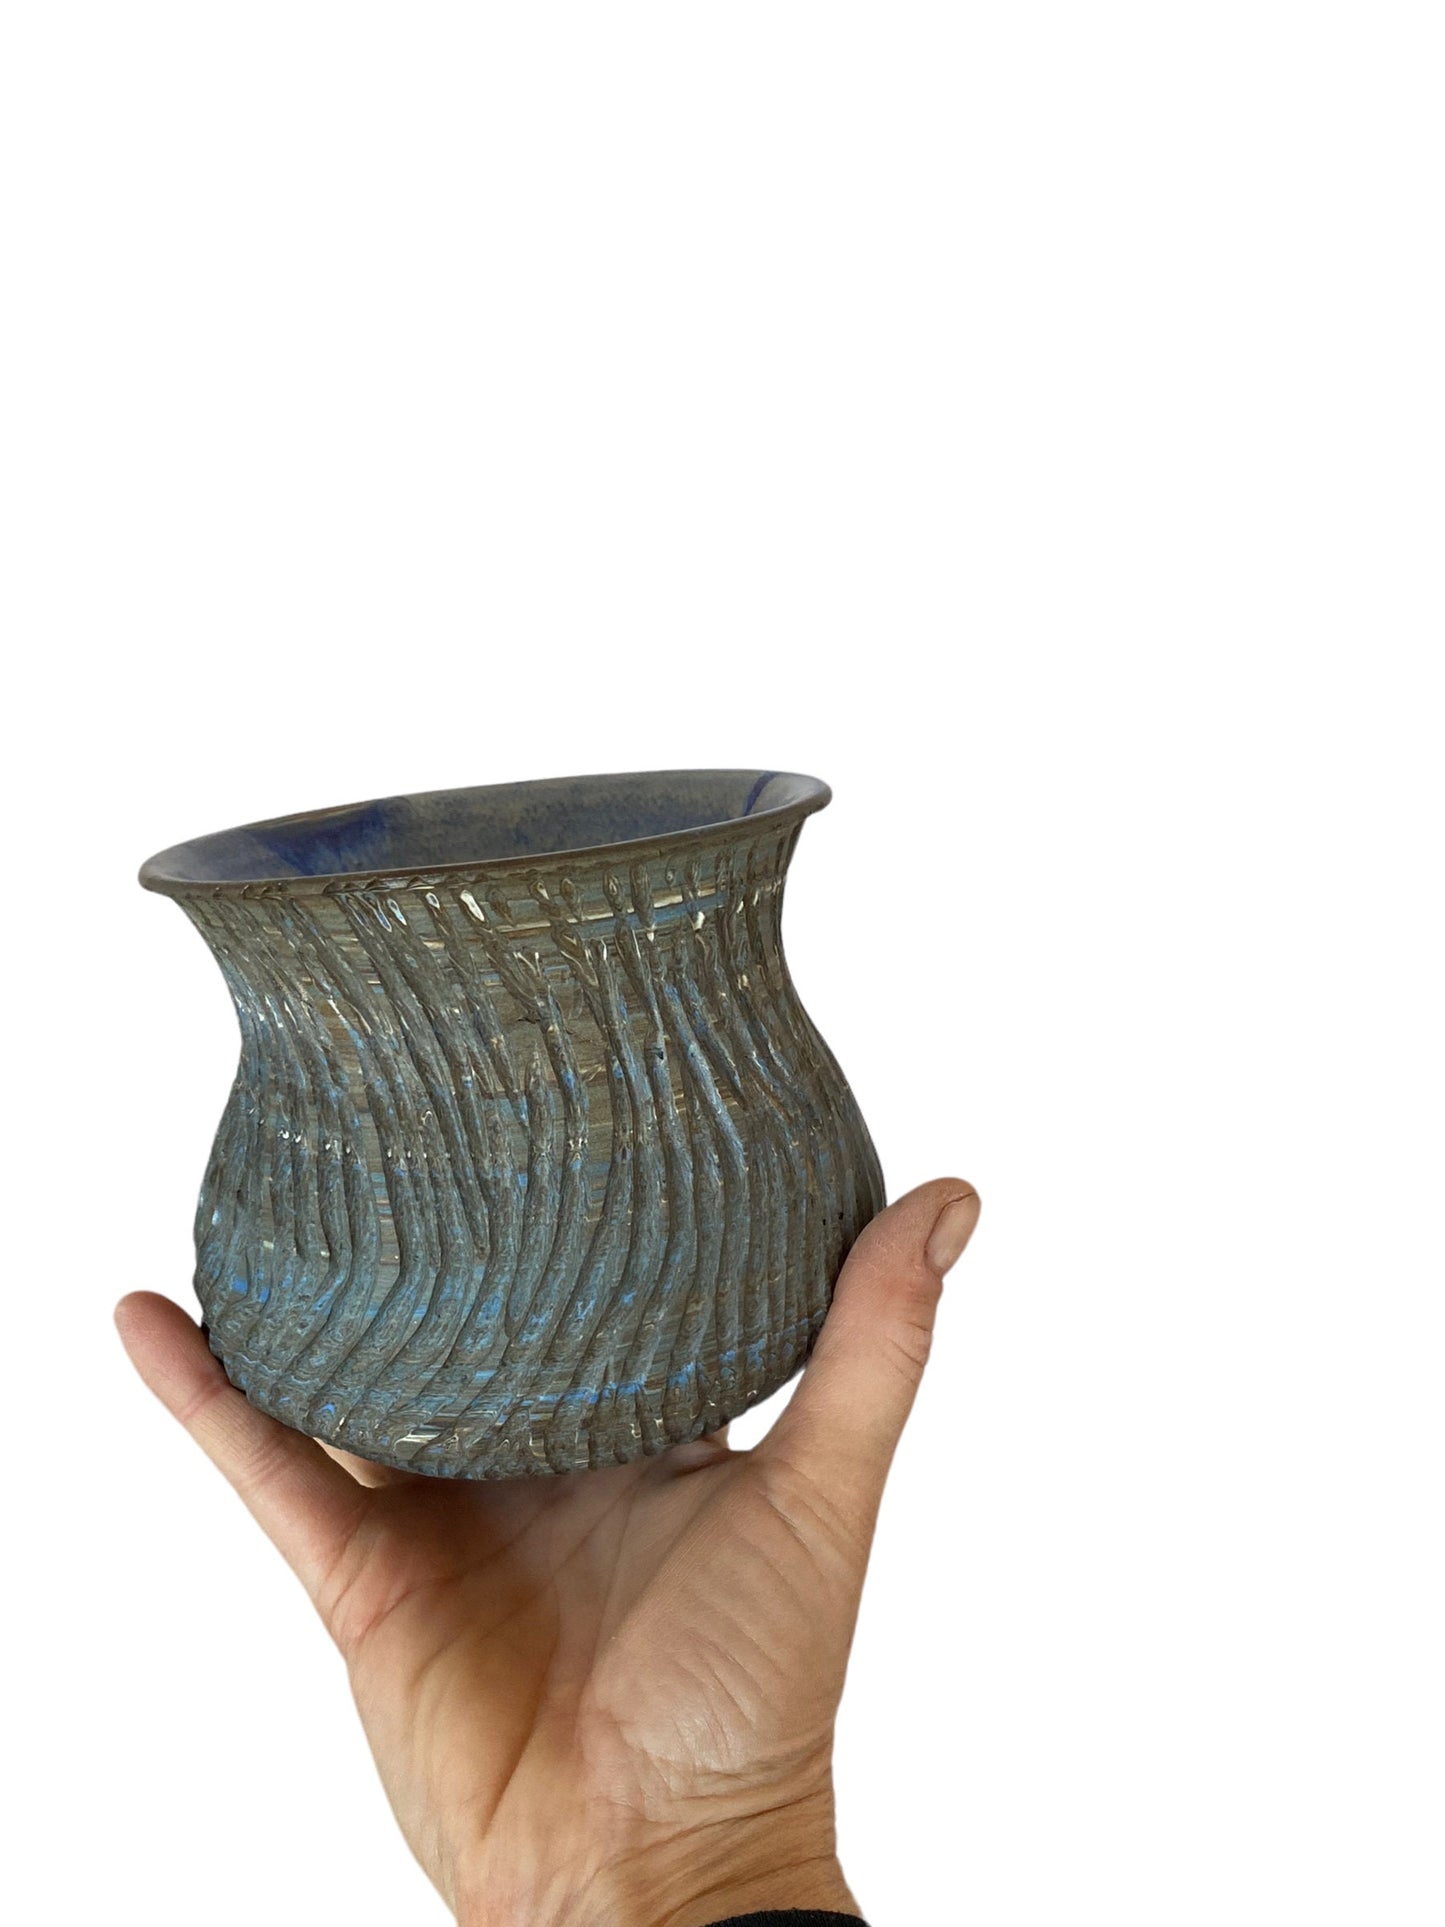 Agateware Pottery Vase - Pottery Flower Vase - Contemporary Ceramic Pottery Vase - Modern Vases